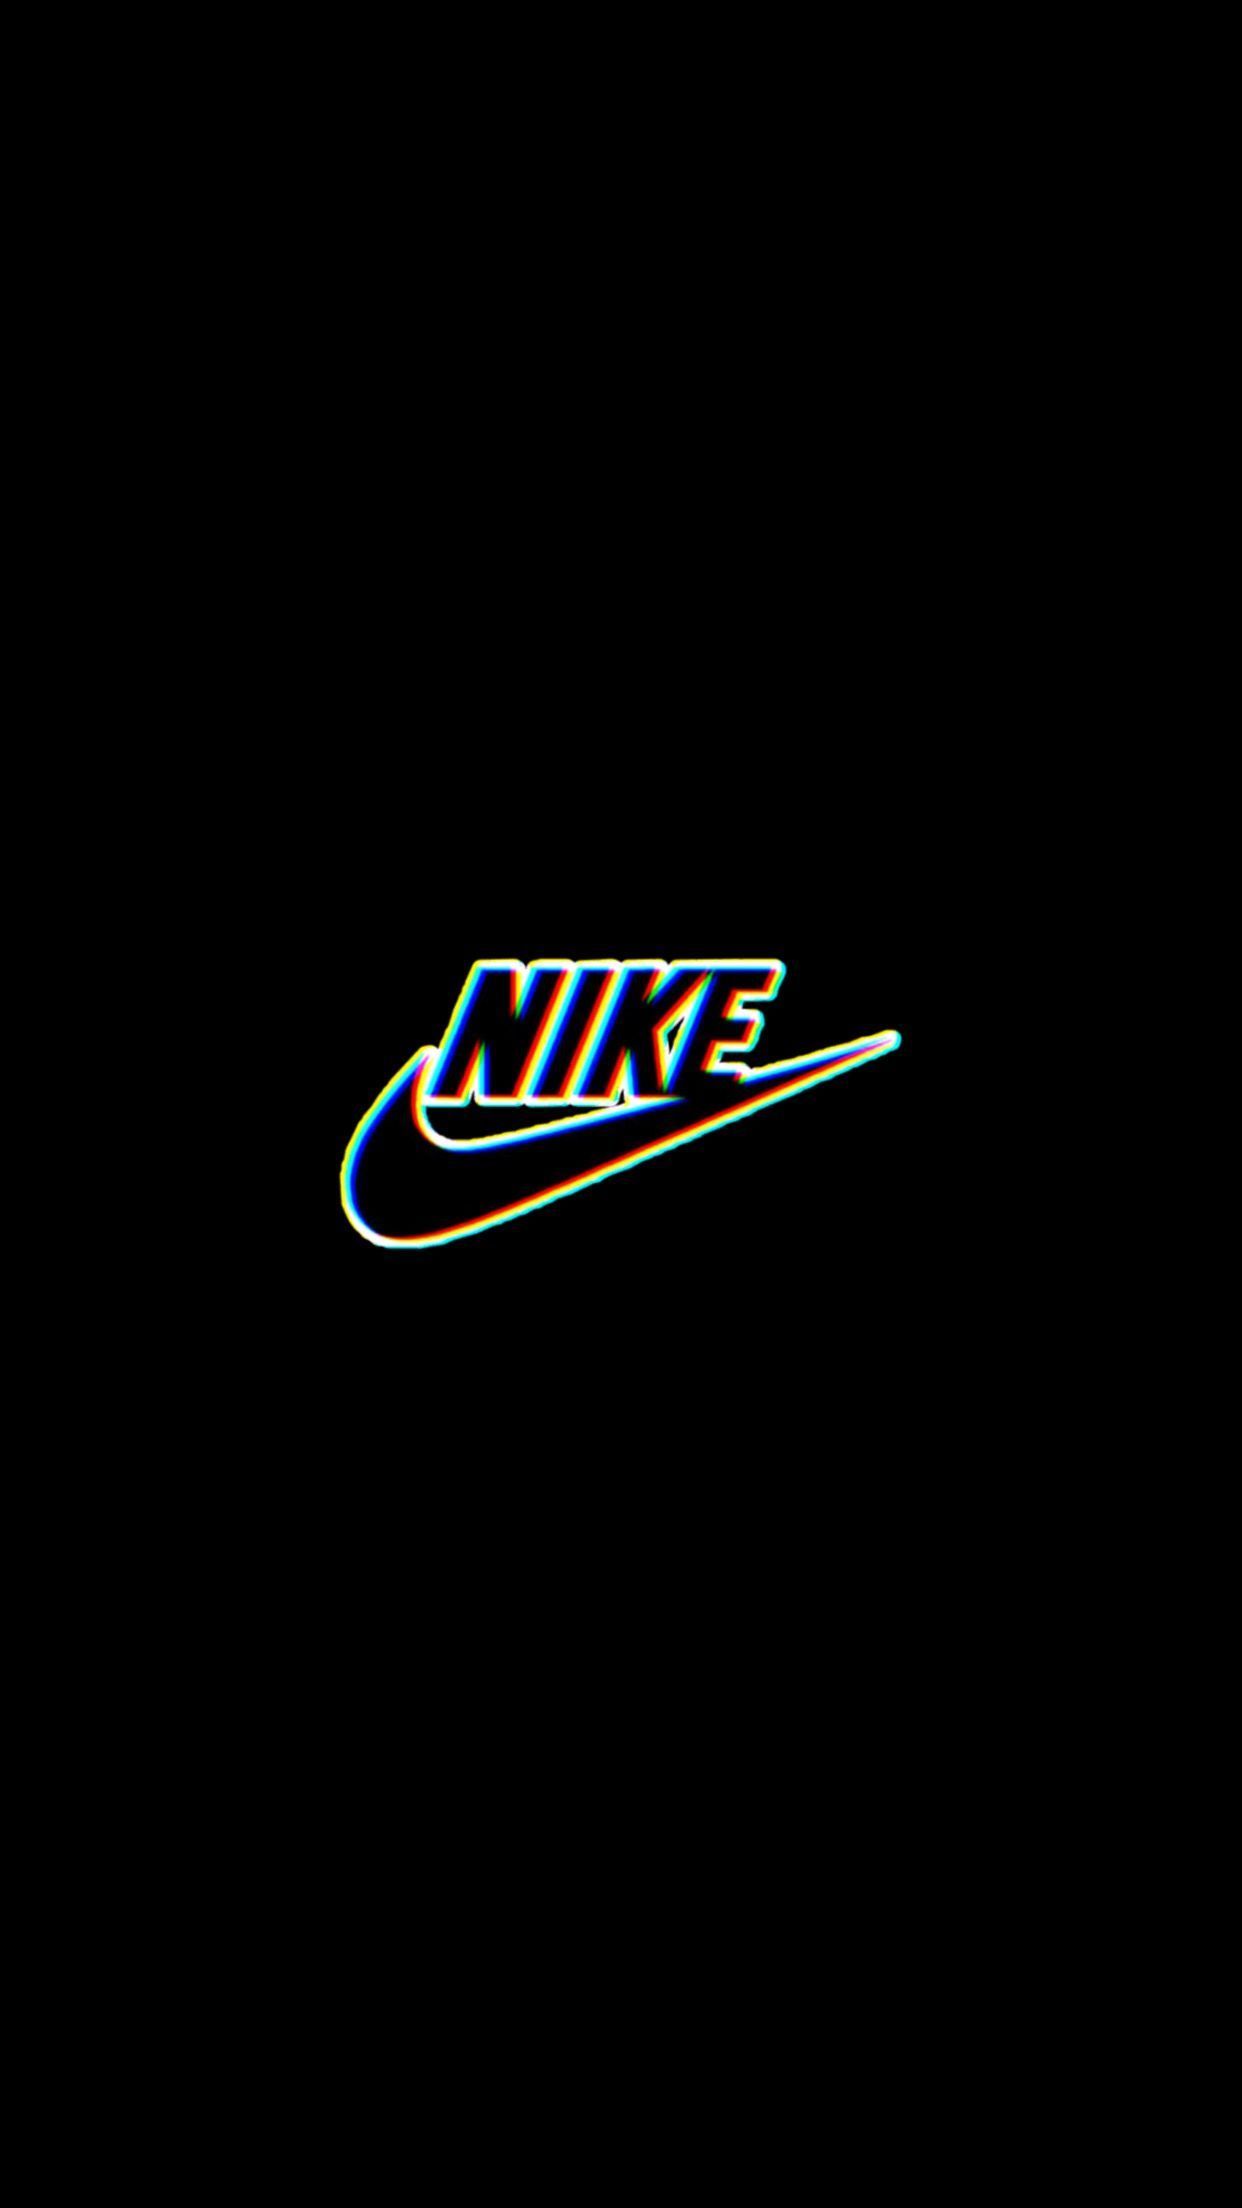 The nike logo in neon colors - Nike, glitch